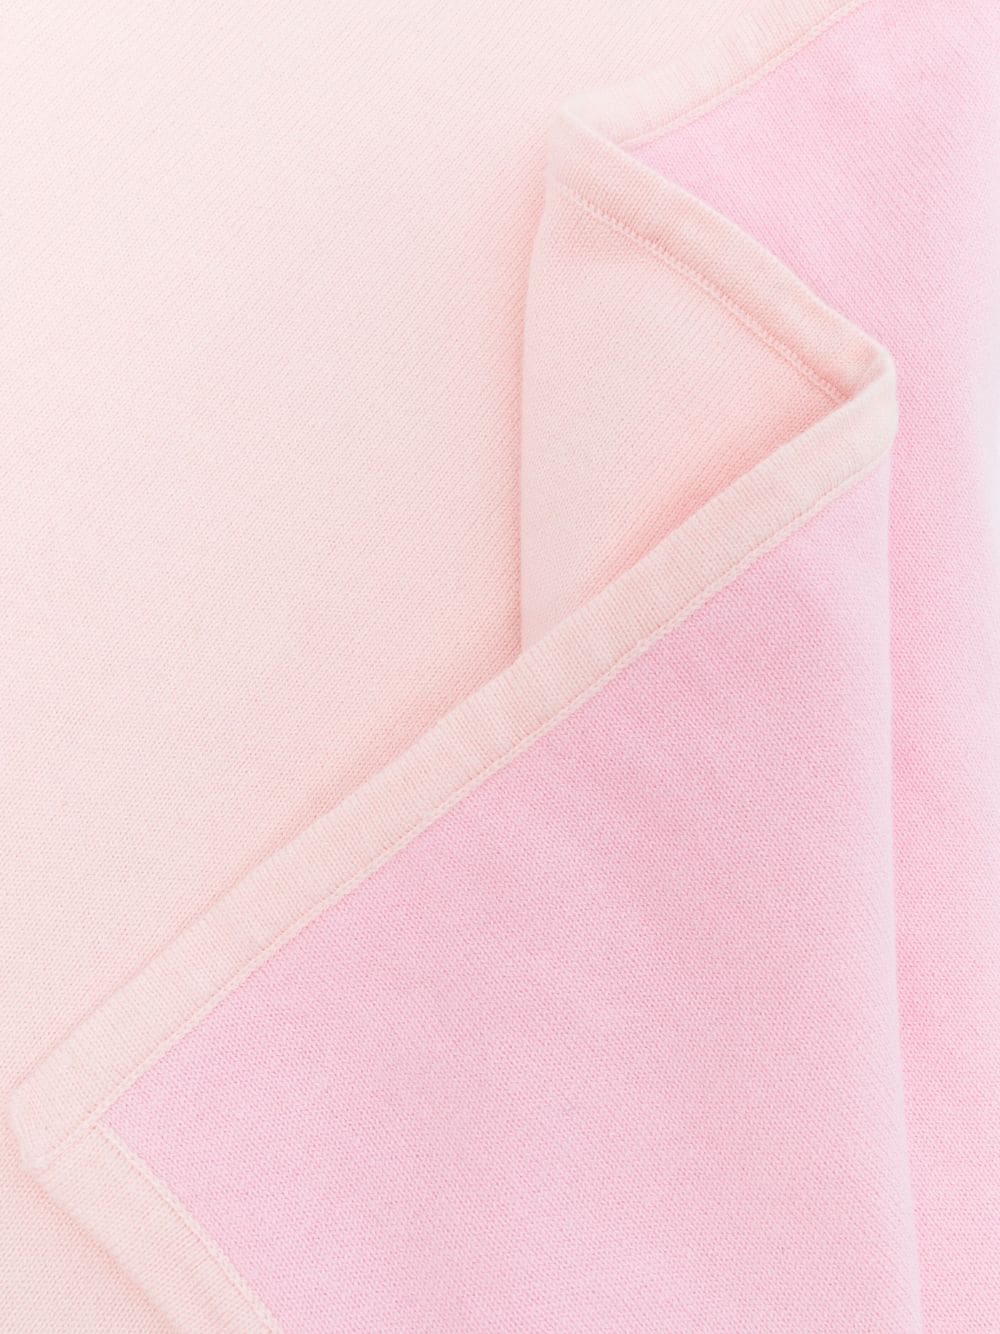 Pink cotton baby girl KENZO knit blanket